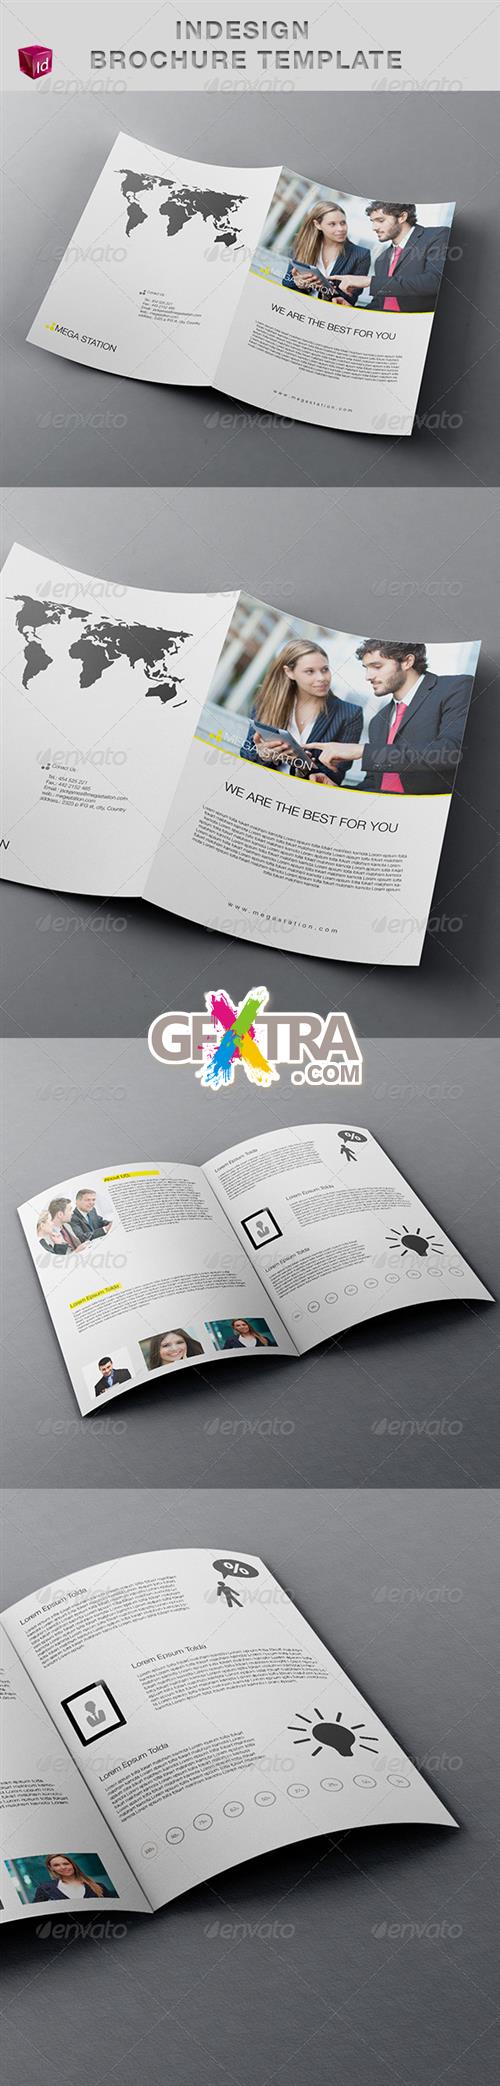 GraphicRiver - Bi-Fold Brochure Indesign Template